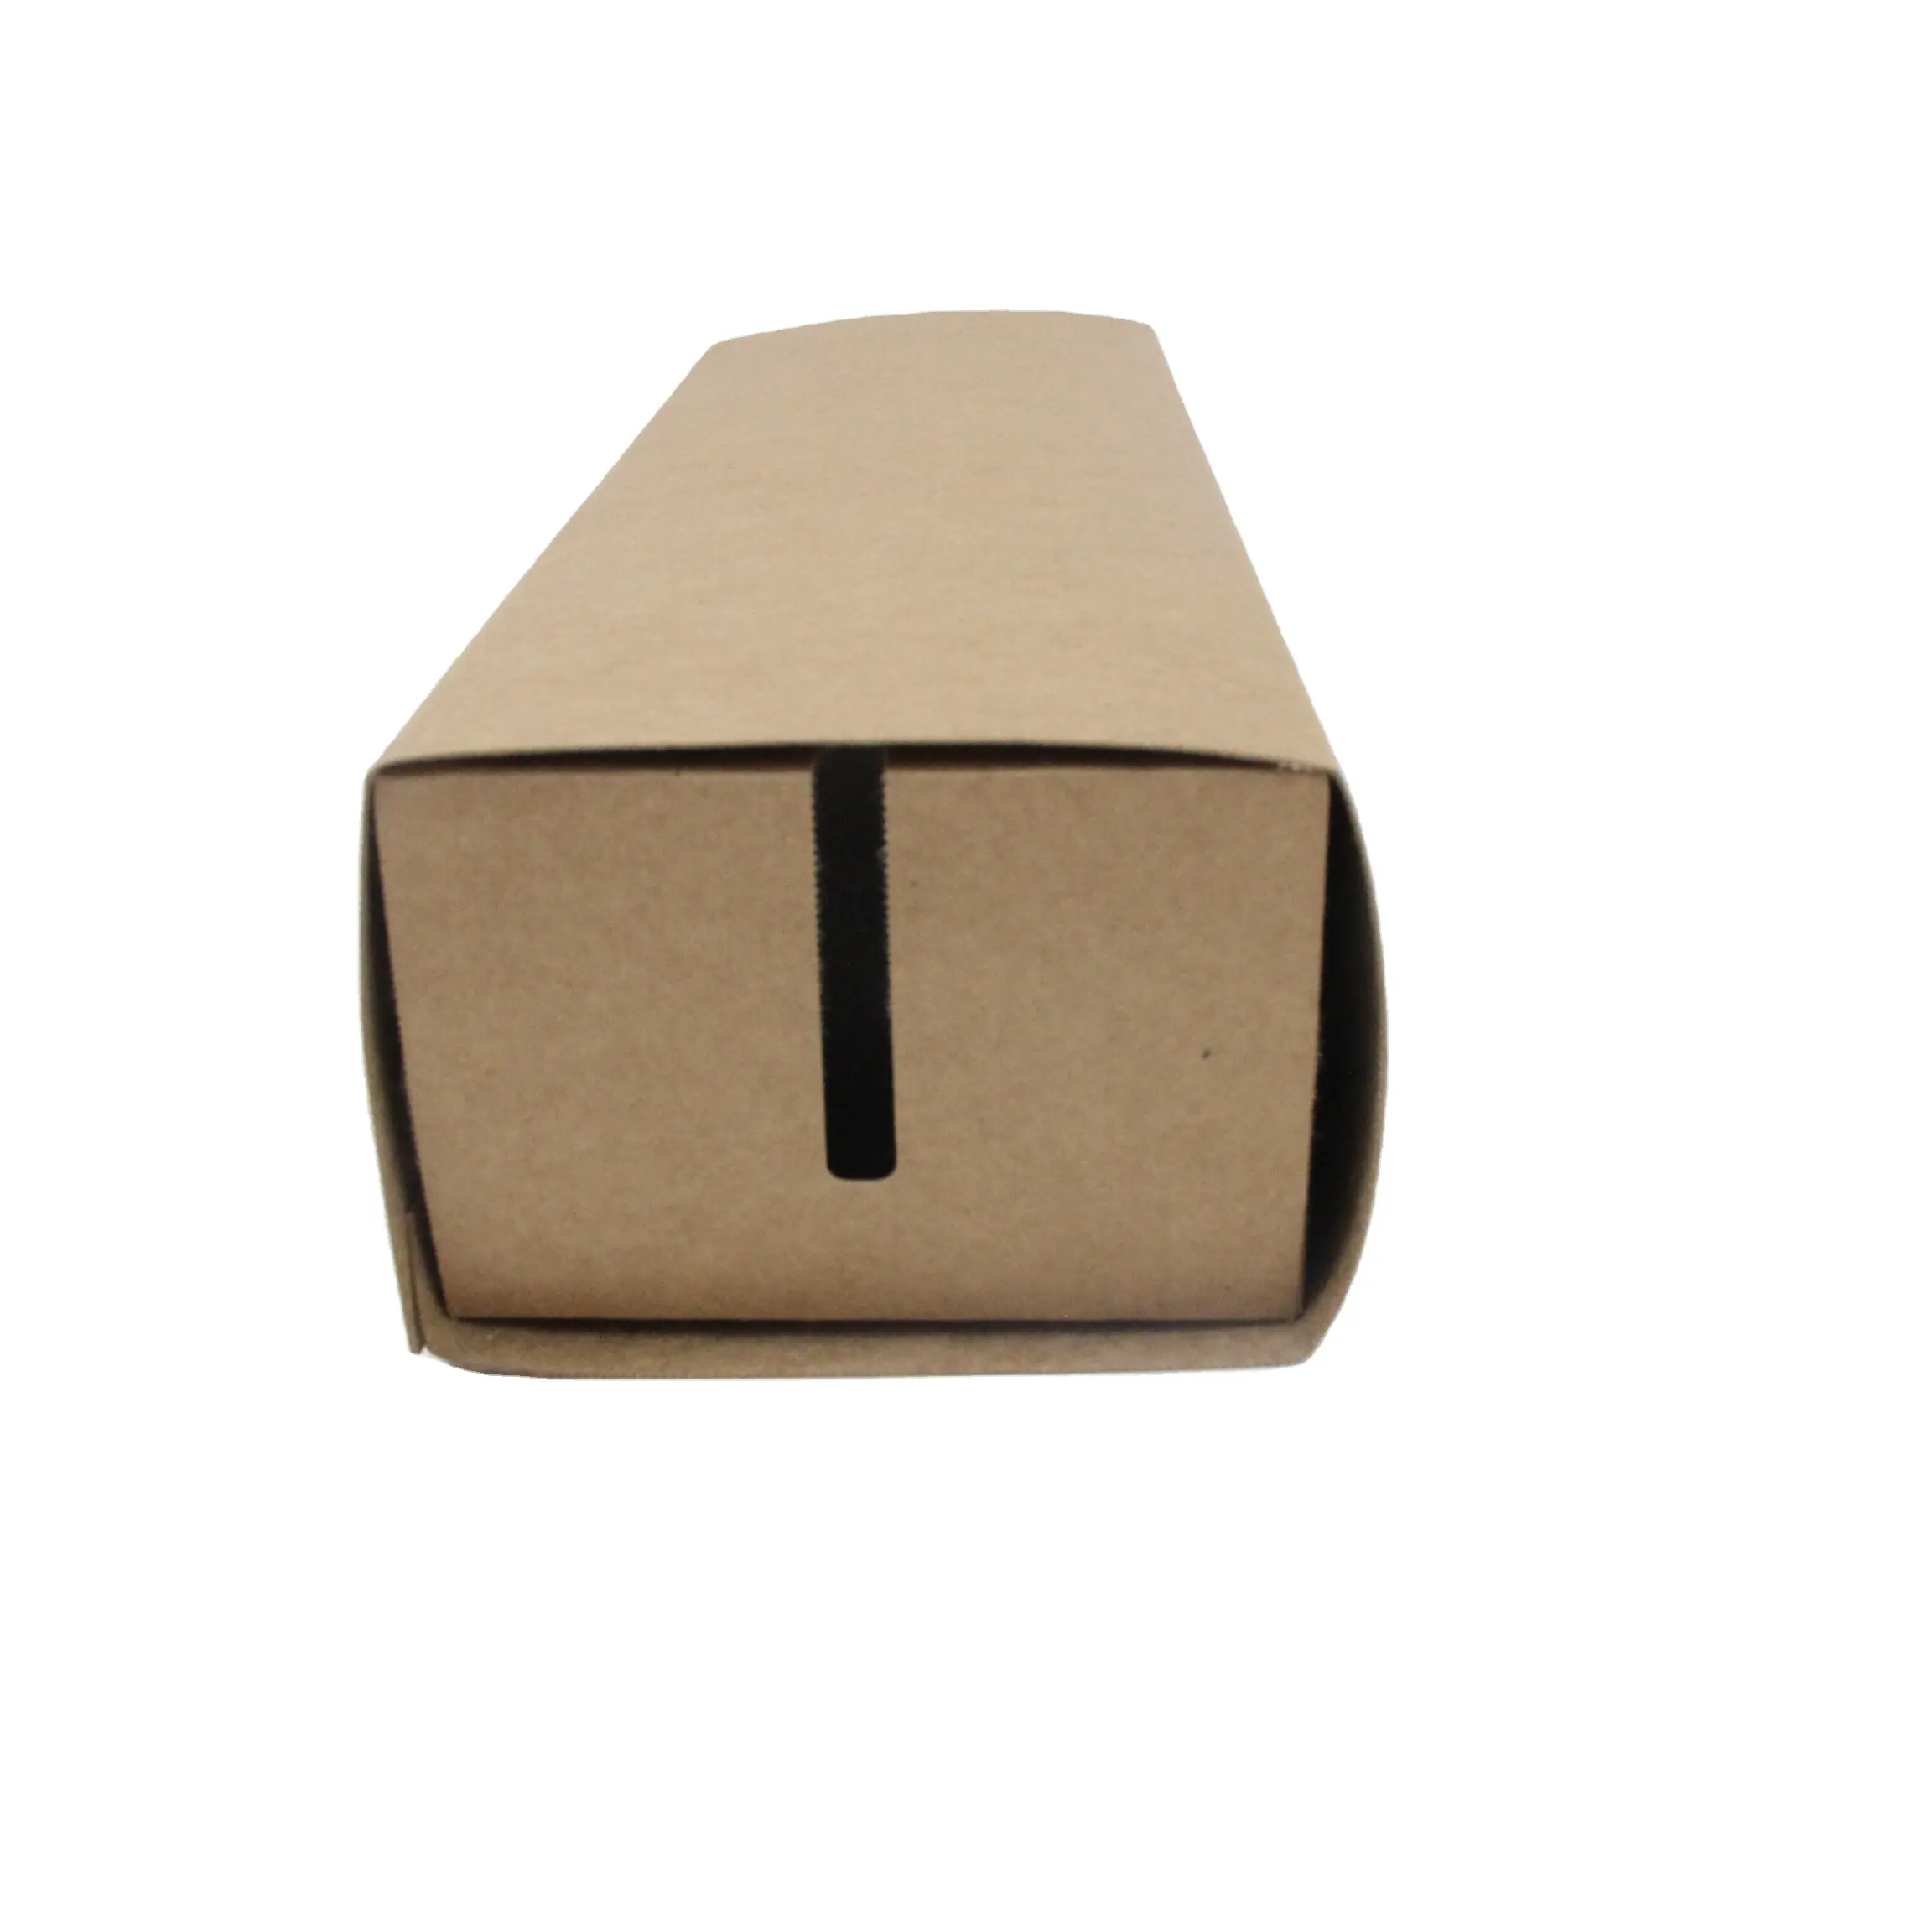 Vente en gros de boîte à tiroir en carton ondulé biodégradable en papier kraft Hot Dog Corn Dog Snack